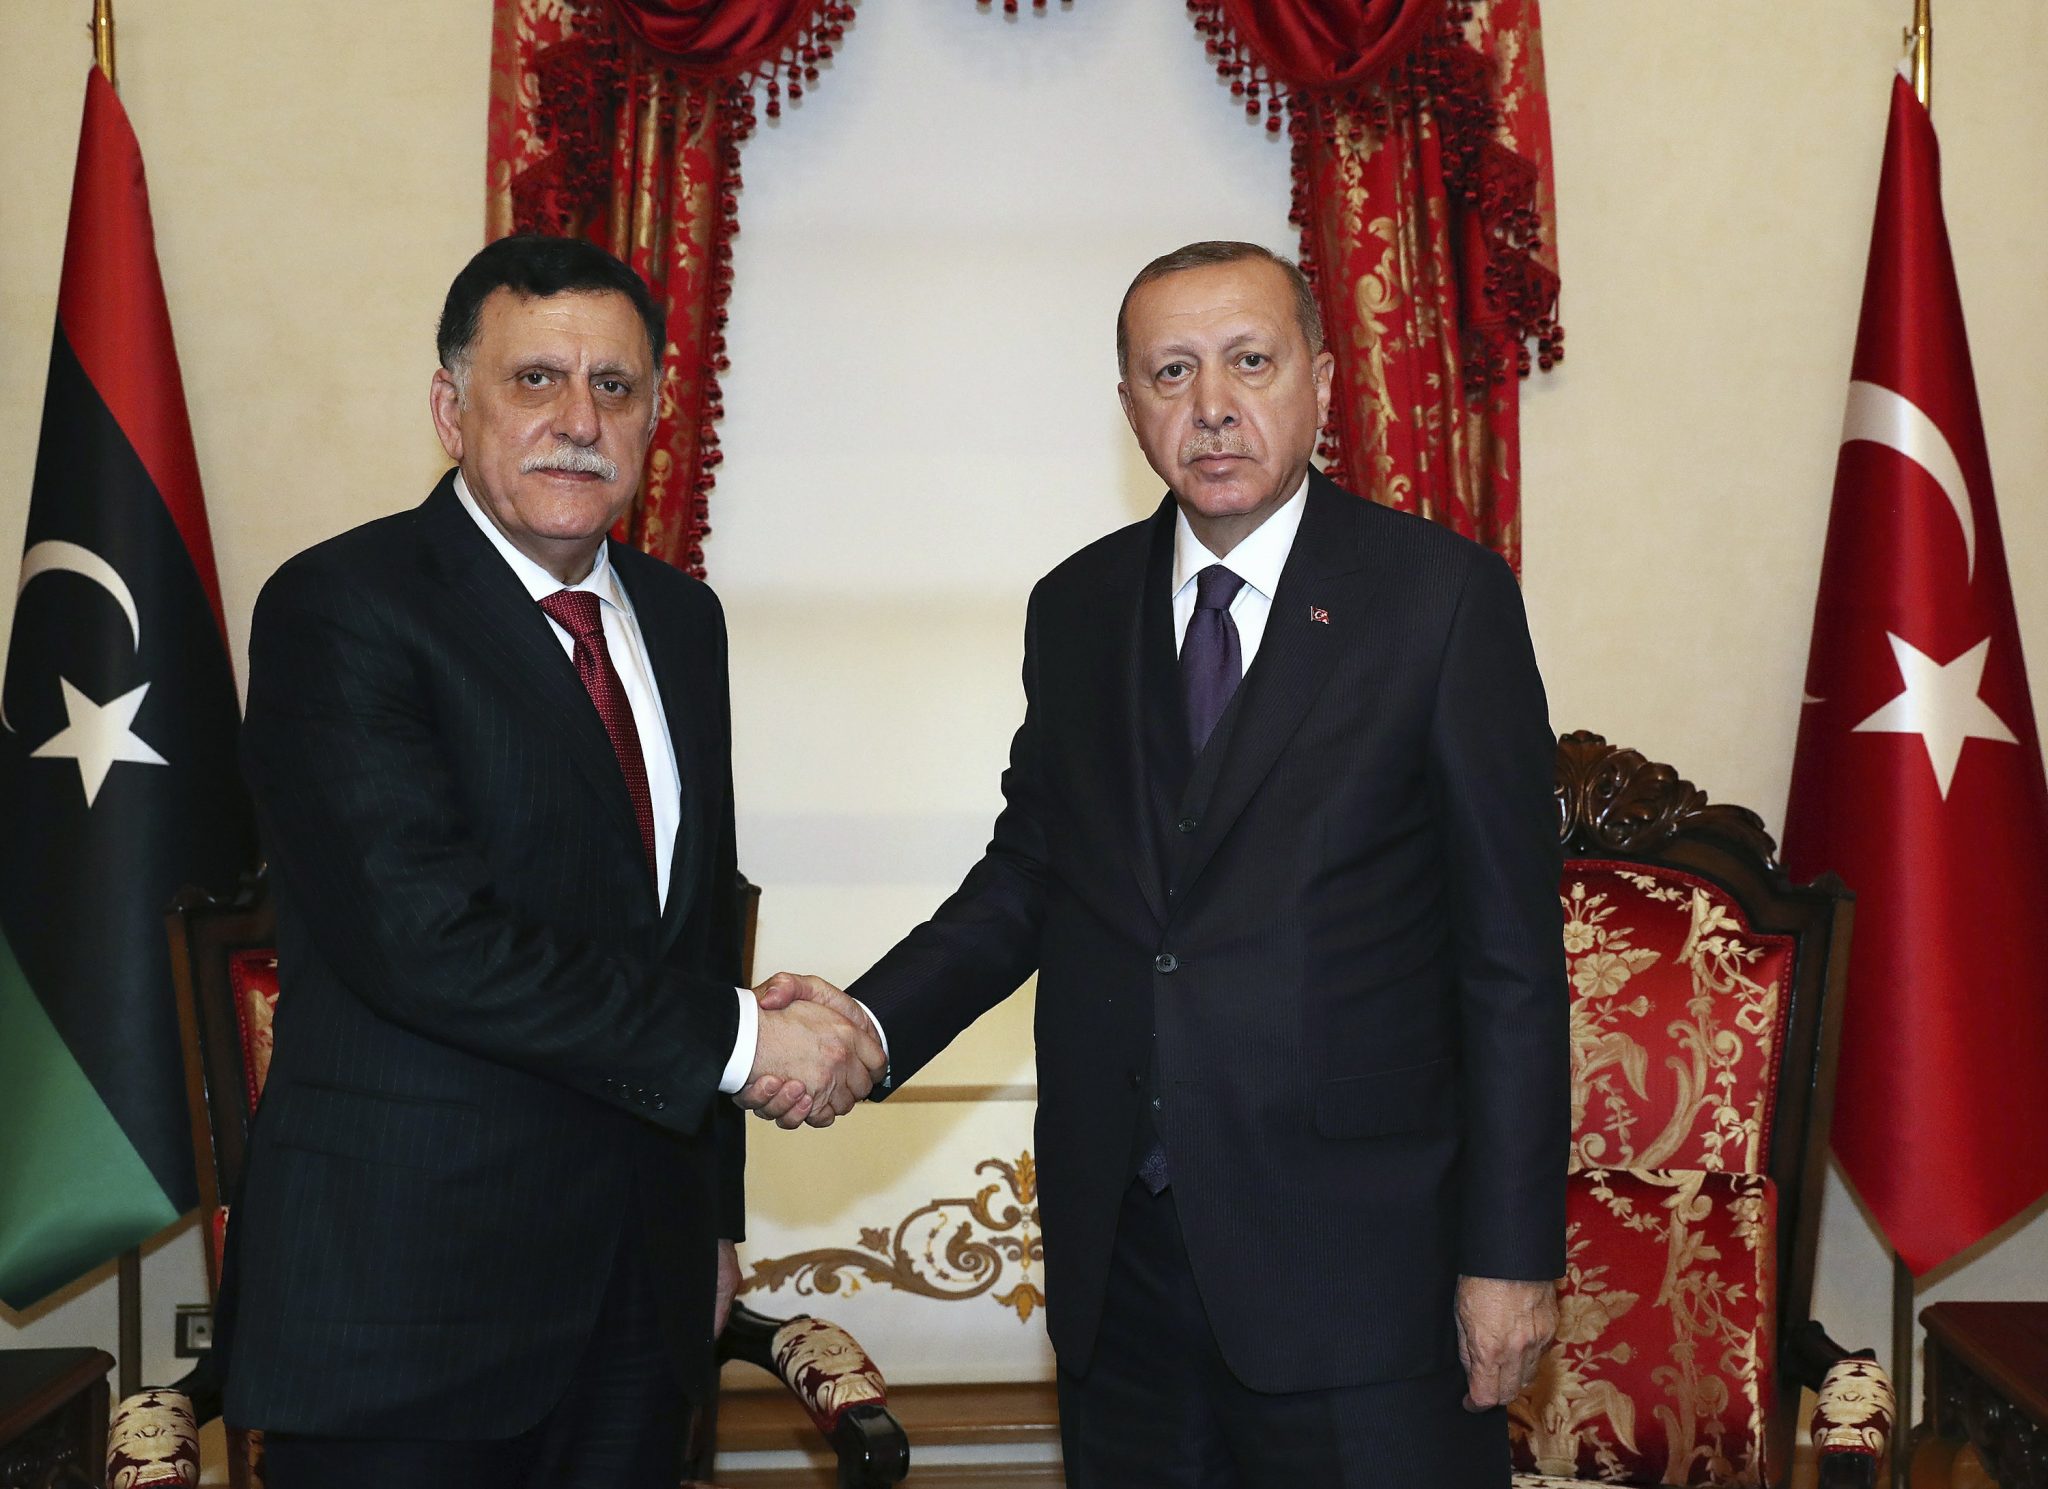 Turkey will soon pass bill to send troops to Libya: President Erdogan